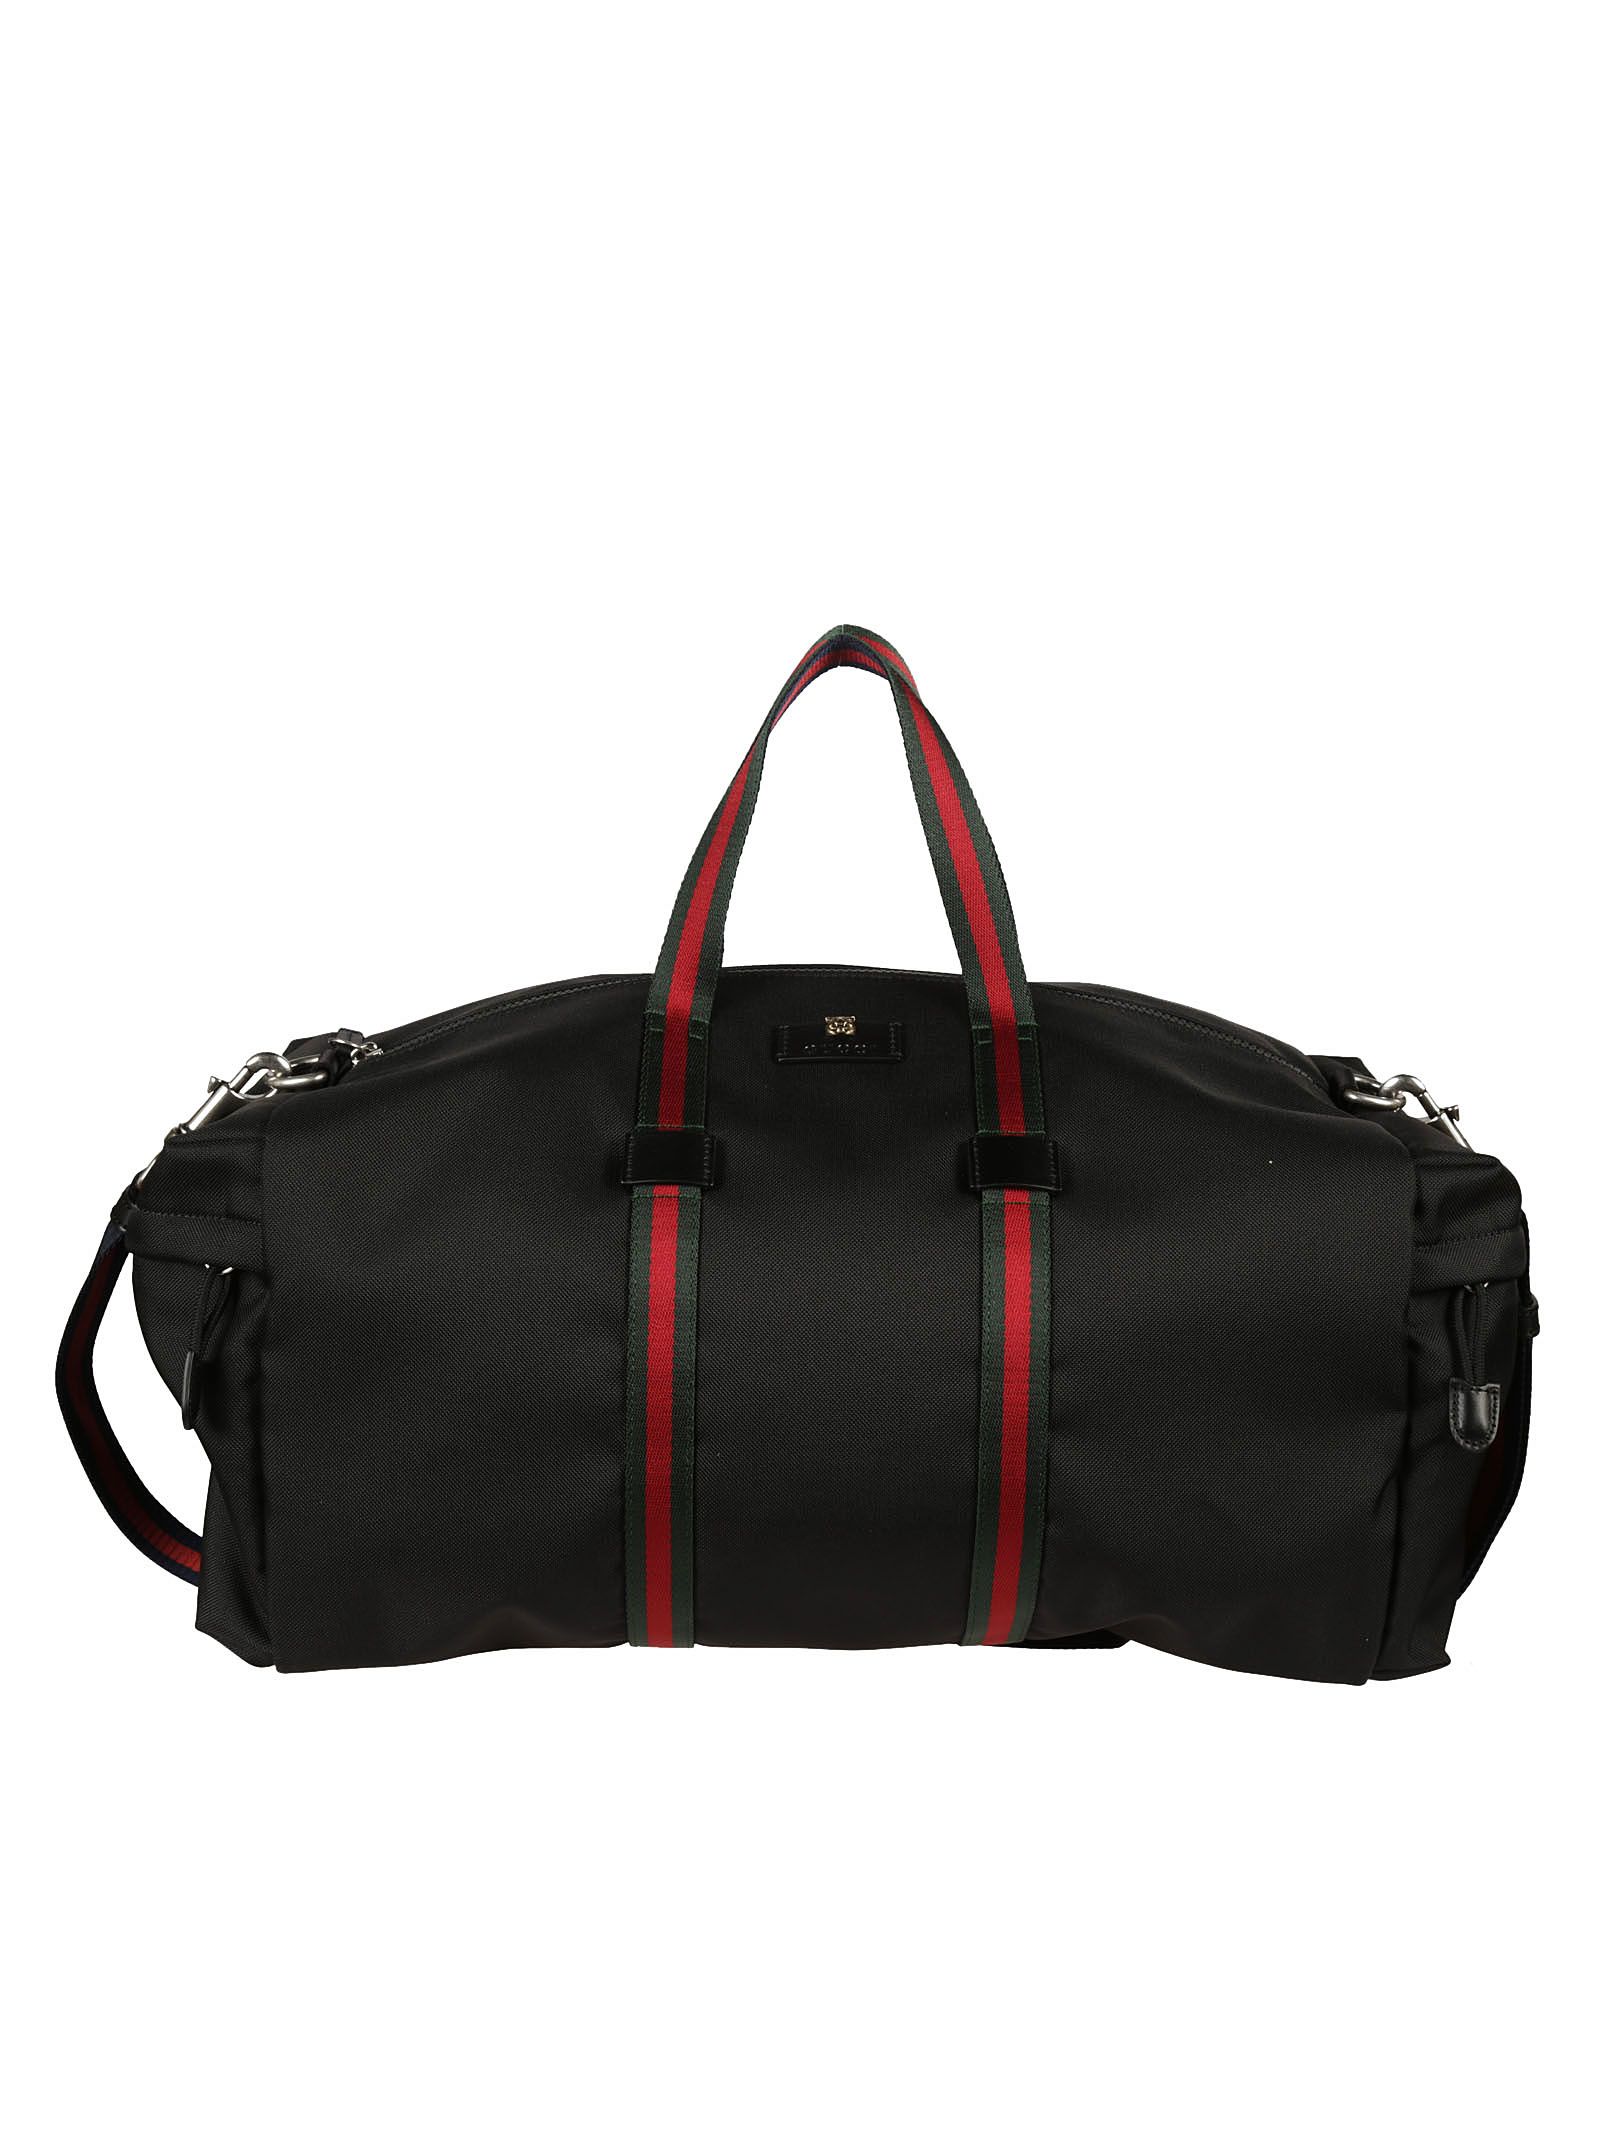 Gucci - Gucci Technical Canvas Duffle Bag - Black, Men's Luggage | Italist